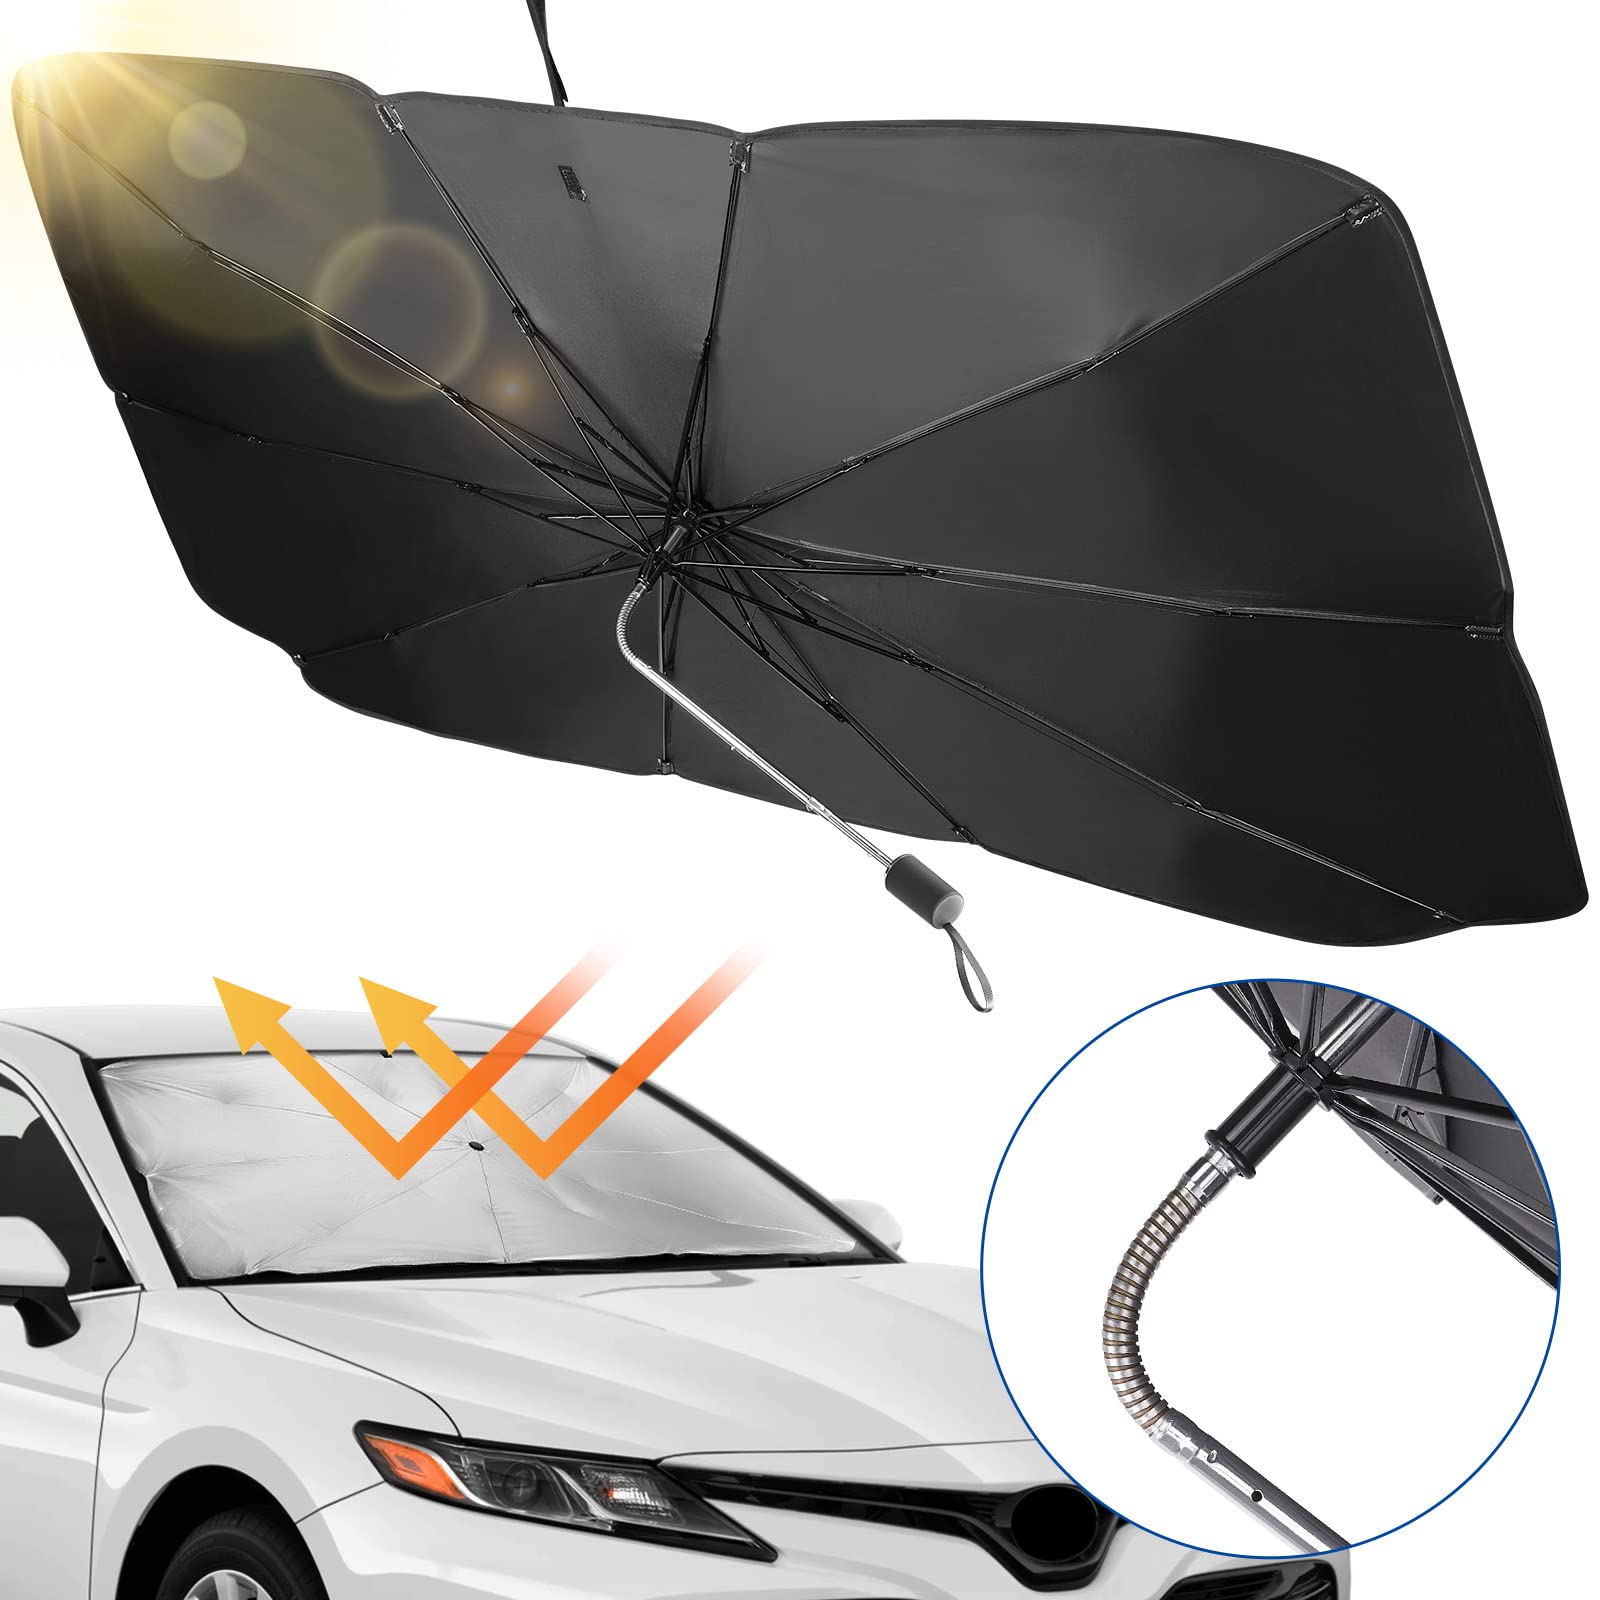 Parasolar tip Umbrela pentru Masina cu Protectie UV, dimensiune 134 x 60 cm